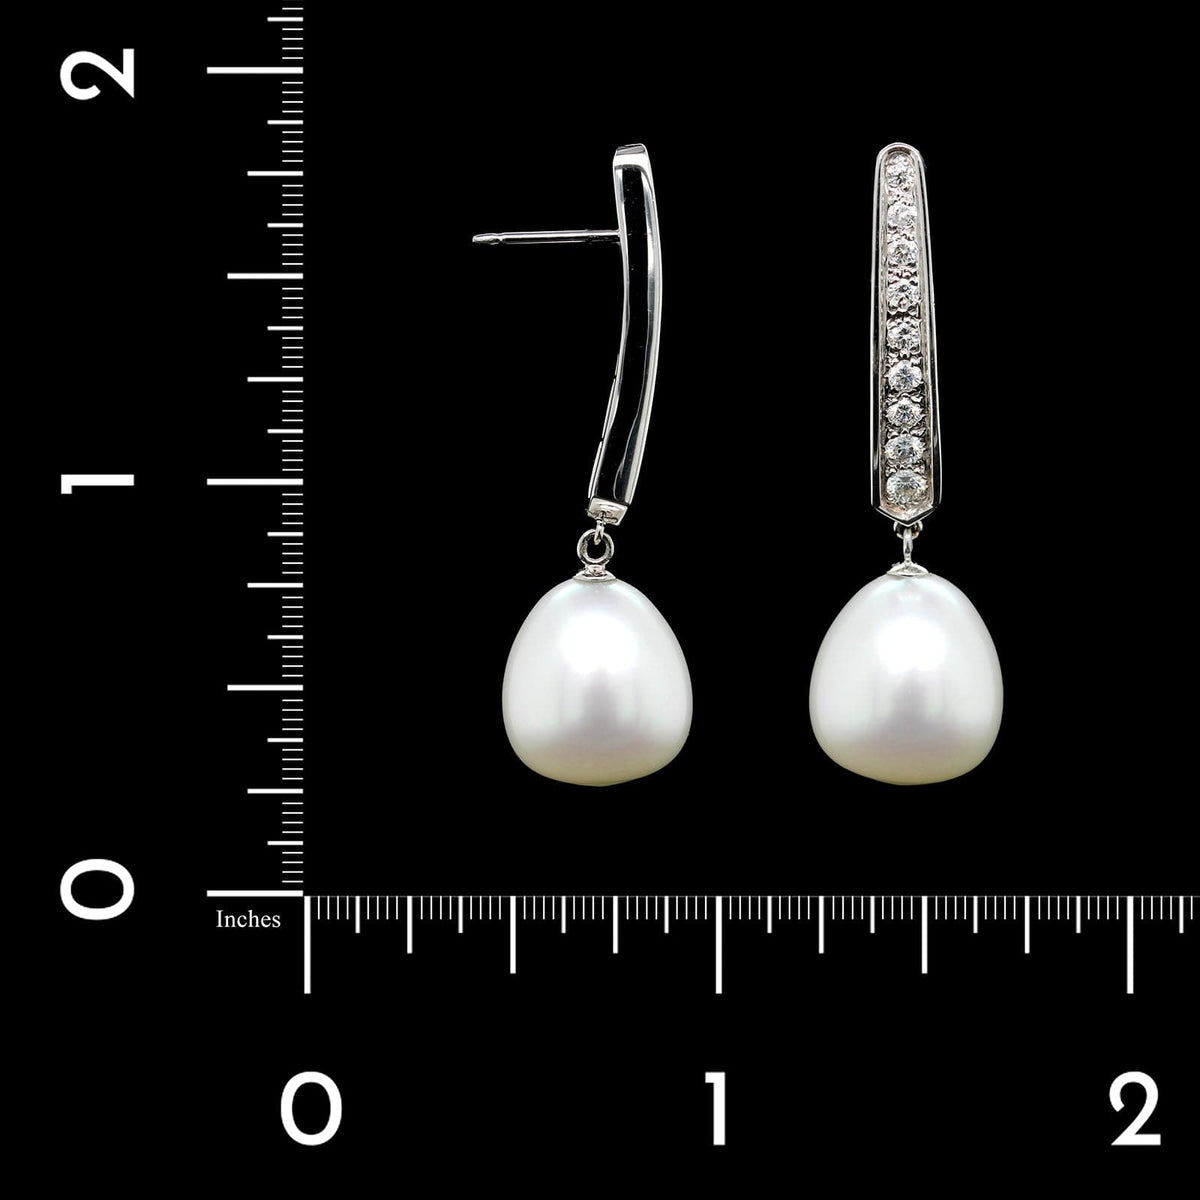 Marlene Stowe 18K White Gold Estate South Sea Cultured Pearl and Diamond Earrings